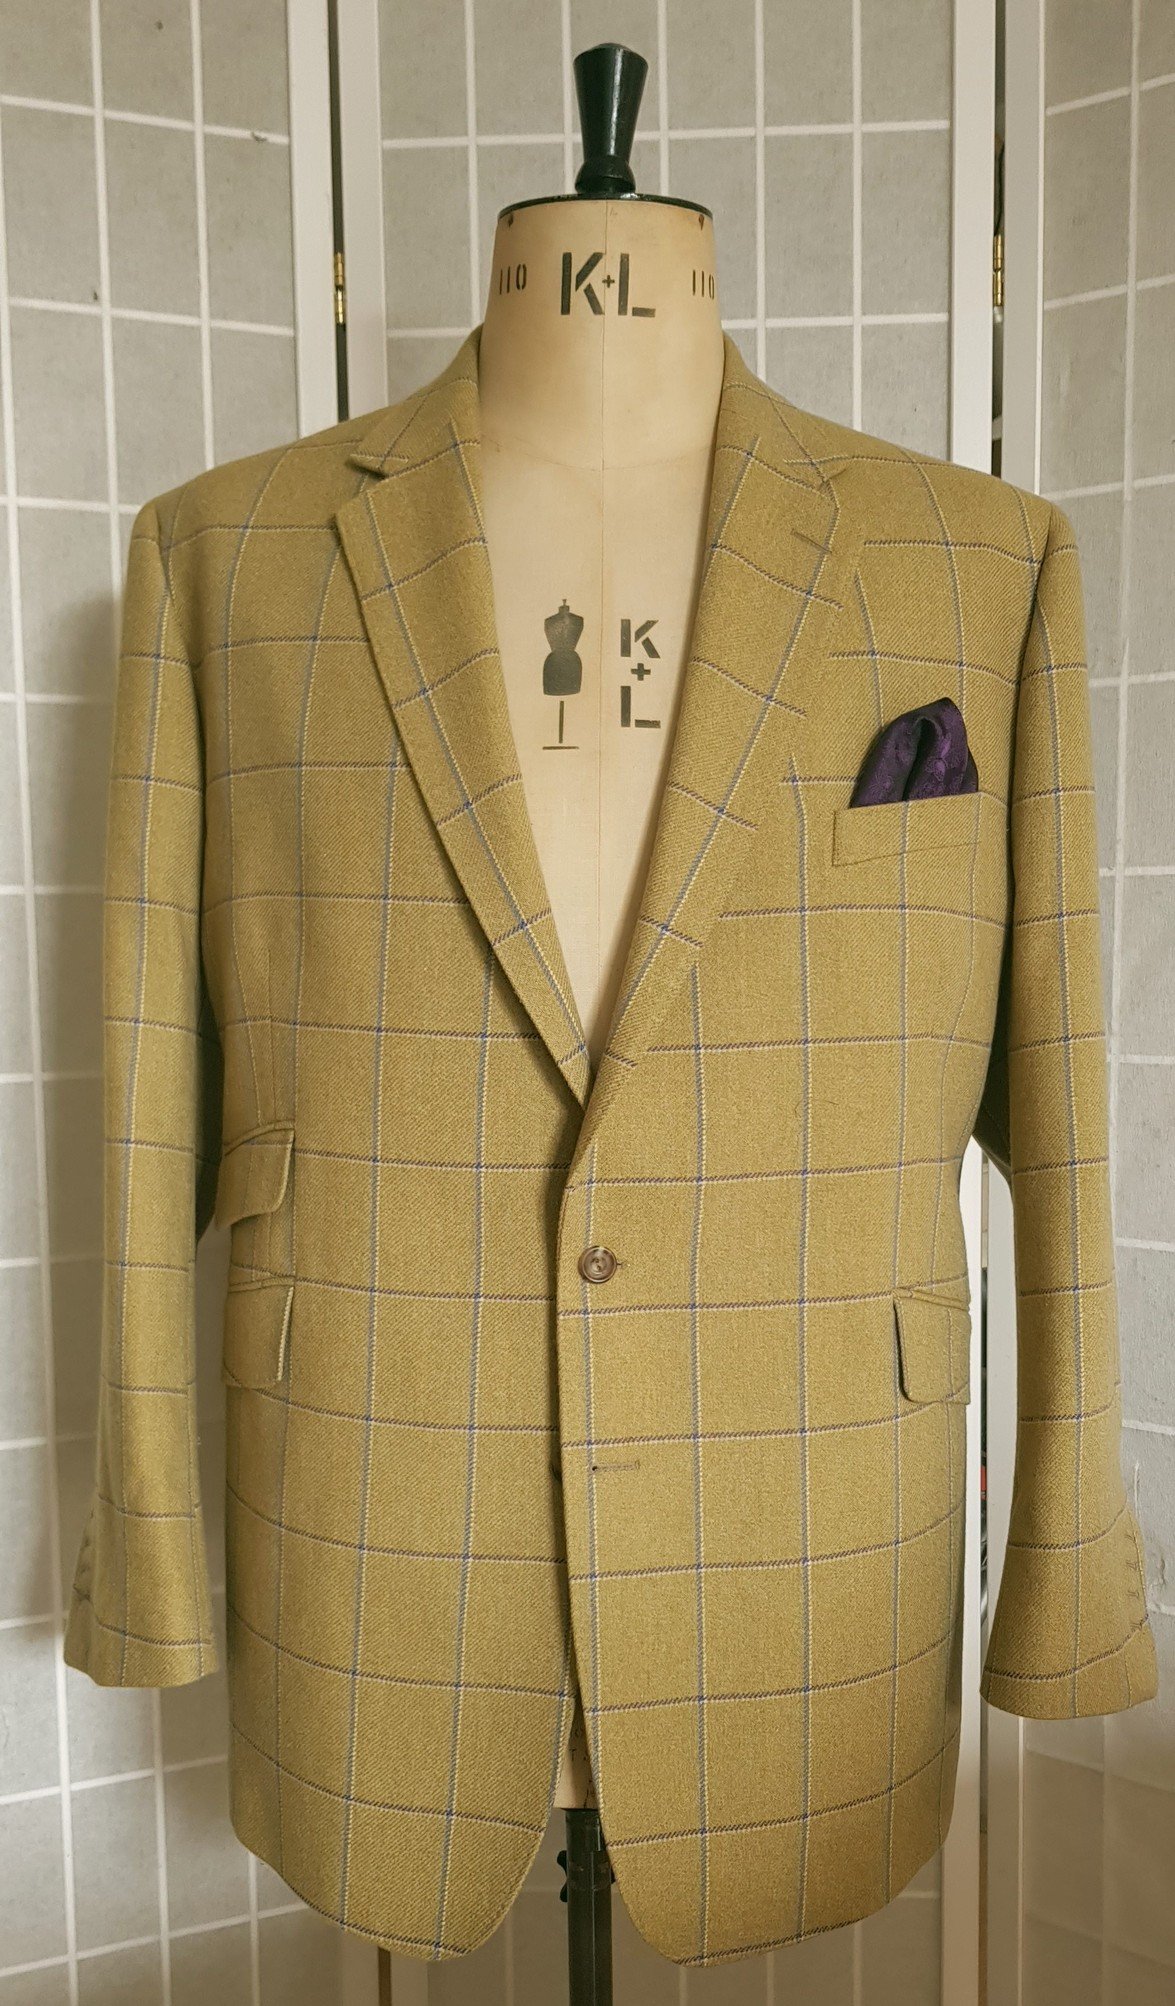 Tweed jacket in Porter and Harding Hartwist (2).jpg